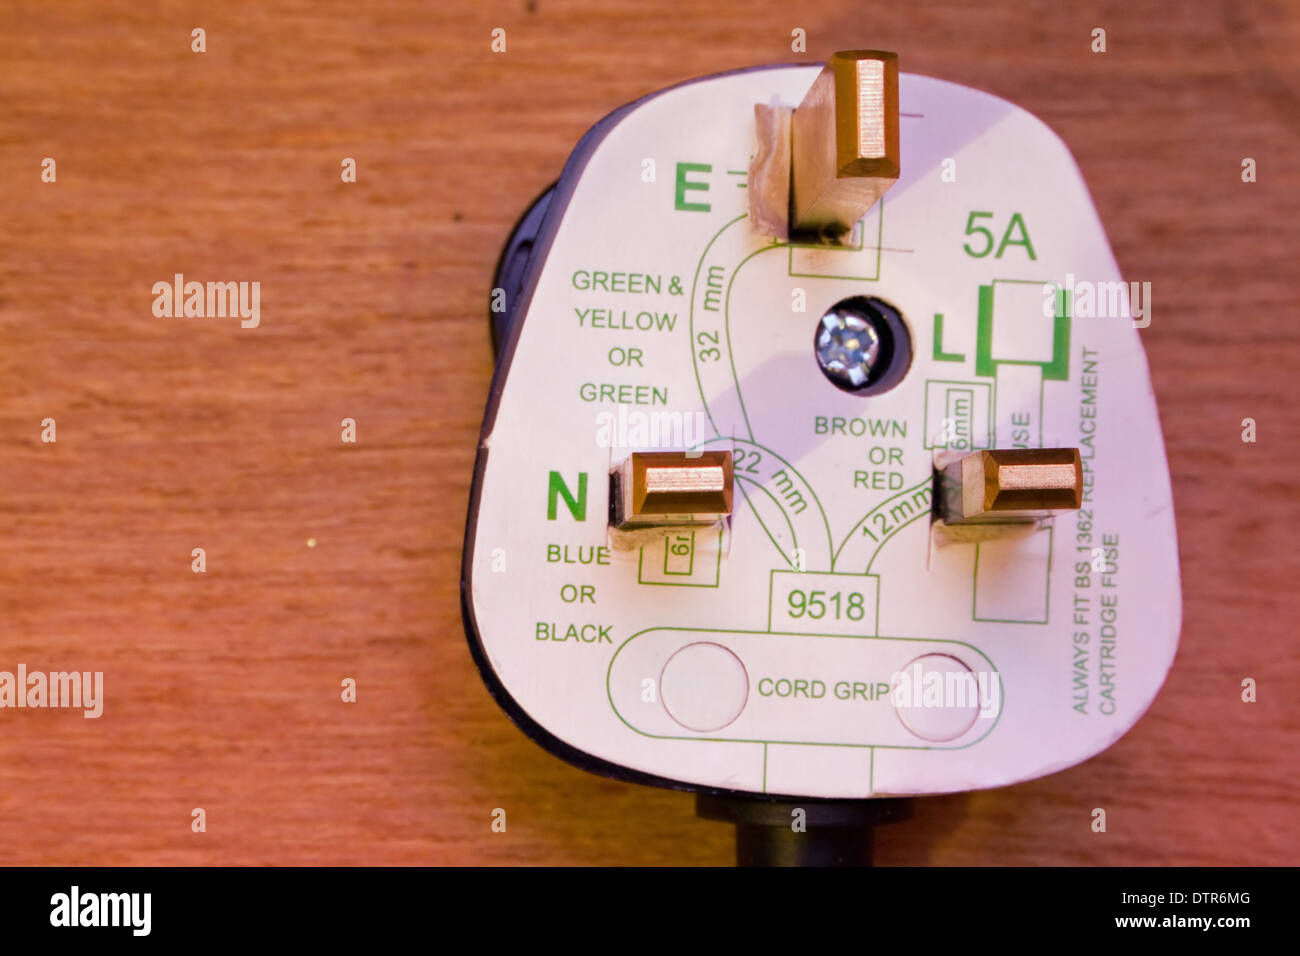 Uk Three Pin Plug With Wiring Diagram Stock Photo